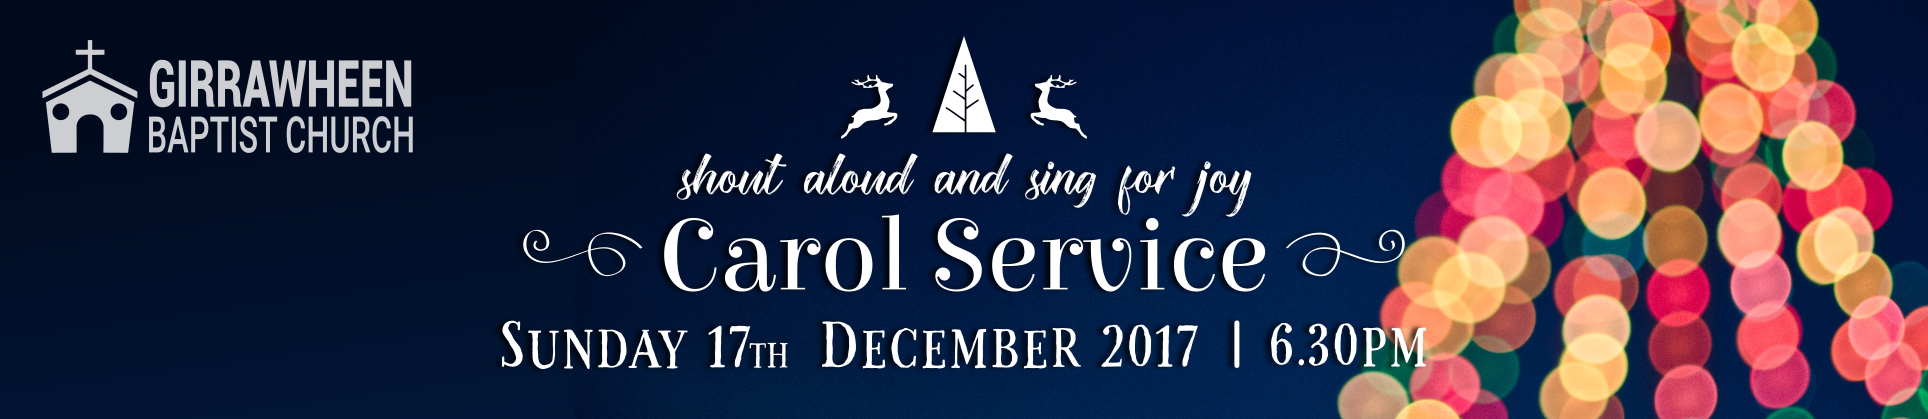 2017 Carol Service